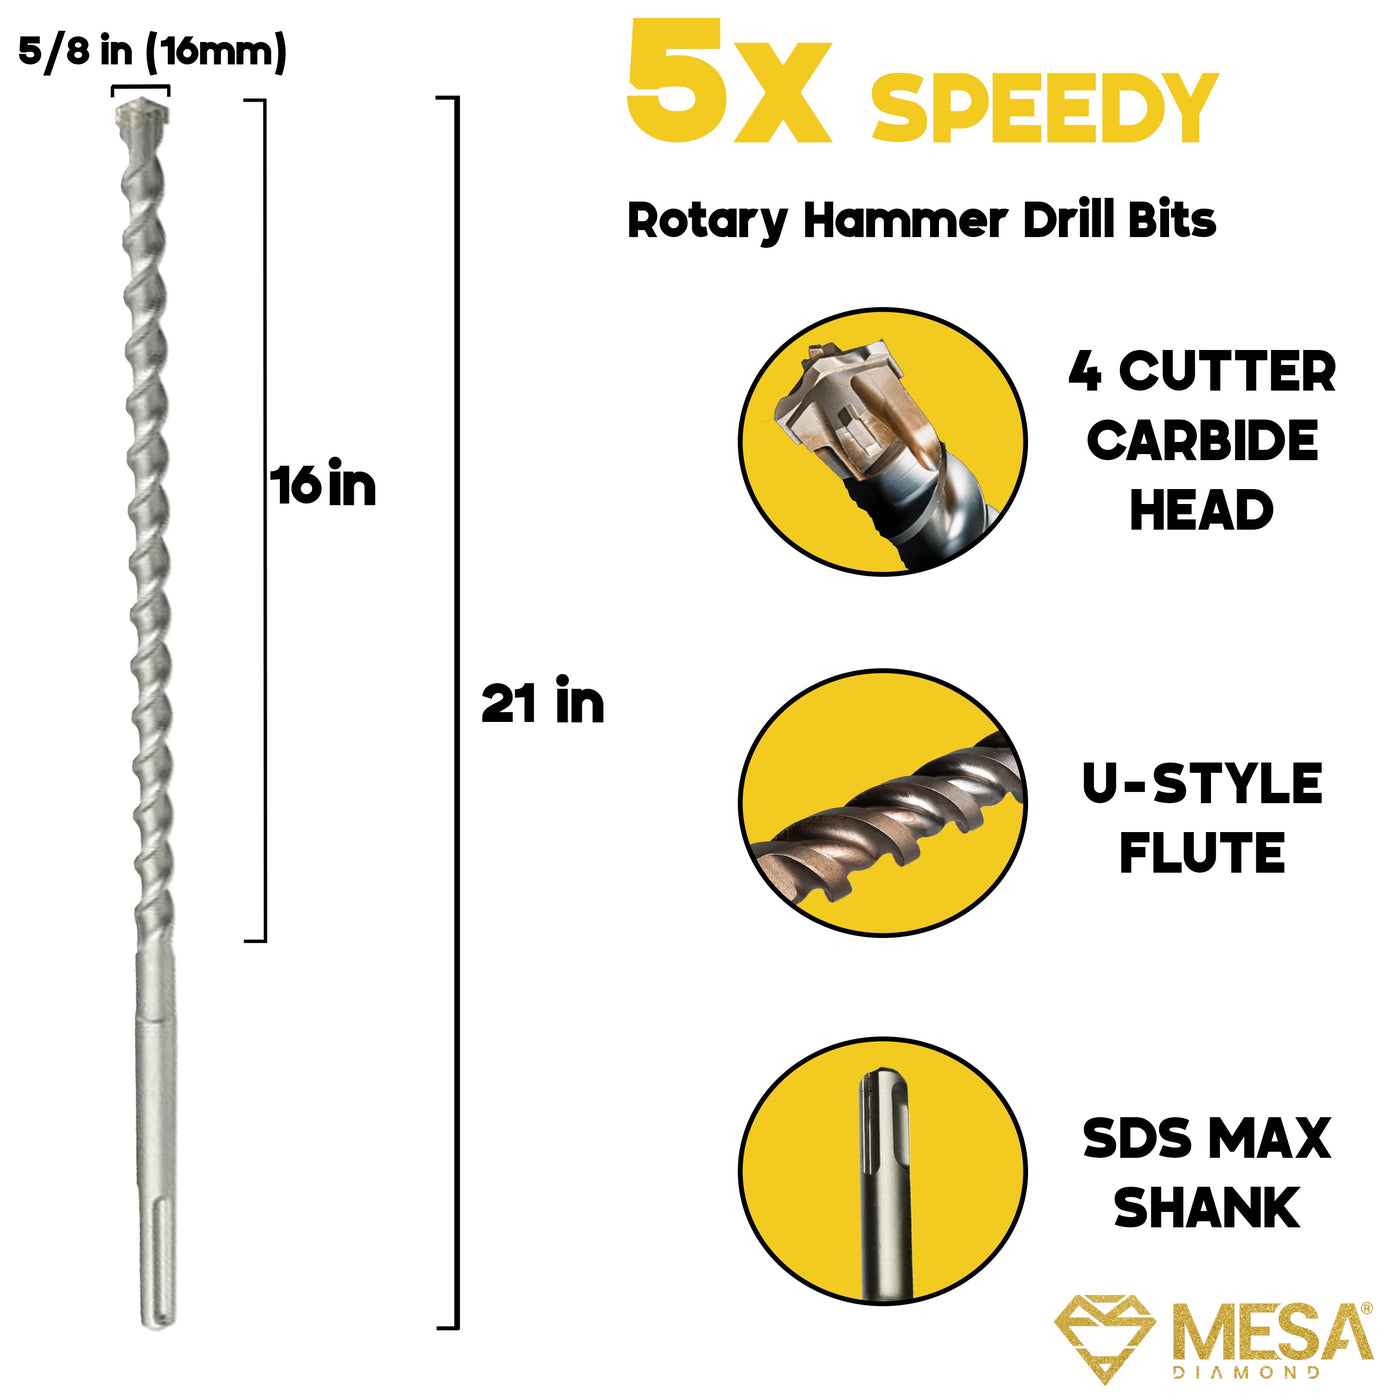 4 CUTTER SDS MAX Masonry Drill BitMESA DIAMOND®4SDSMAX16215/8 in (16mm)5/8 in (16mm)21 in